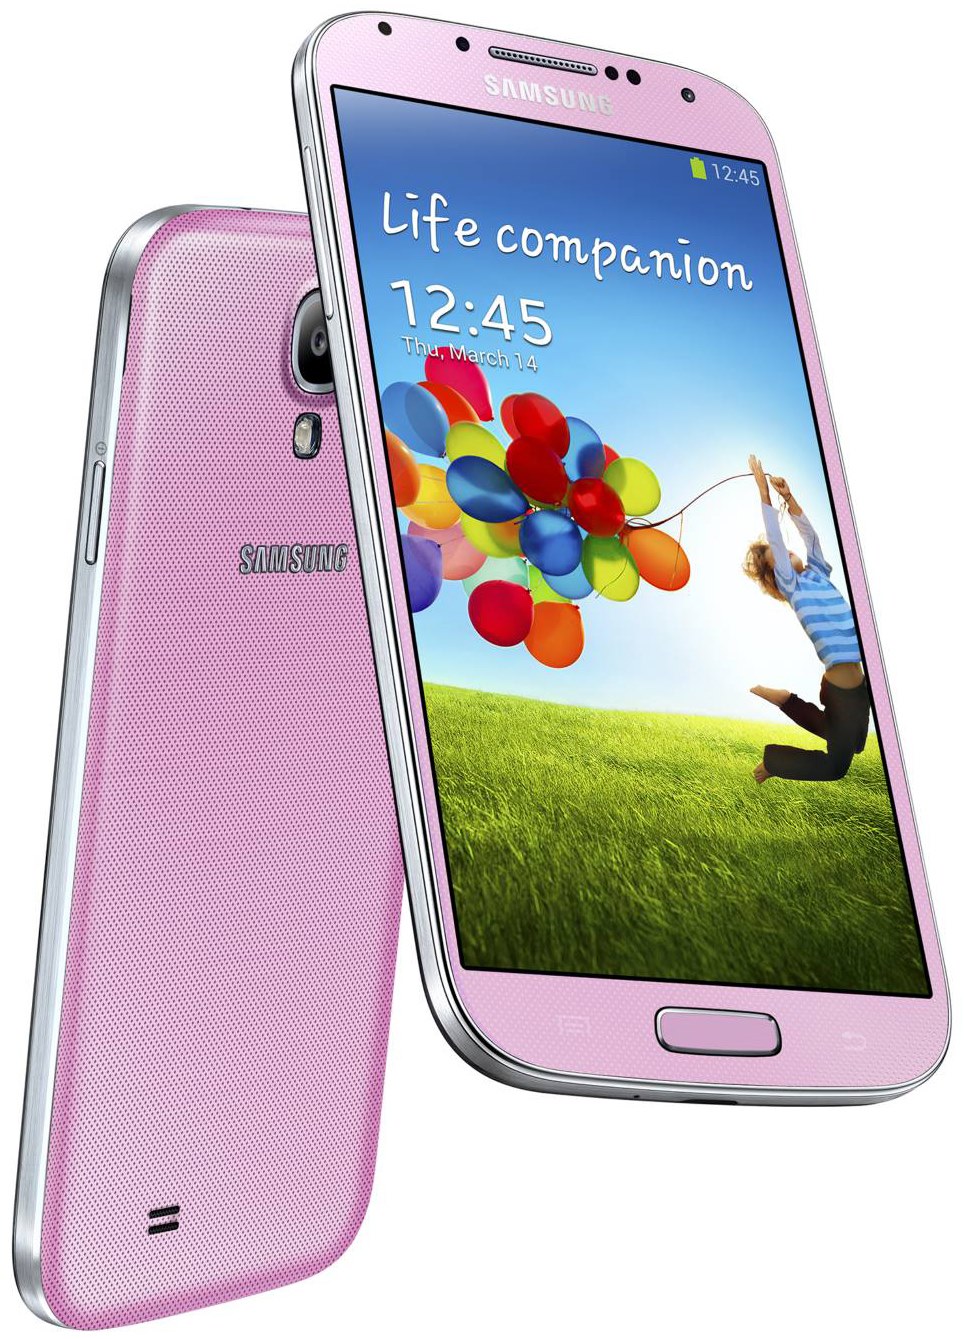 Samsung--Galaxy-s4-Pink-Colour